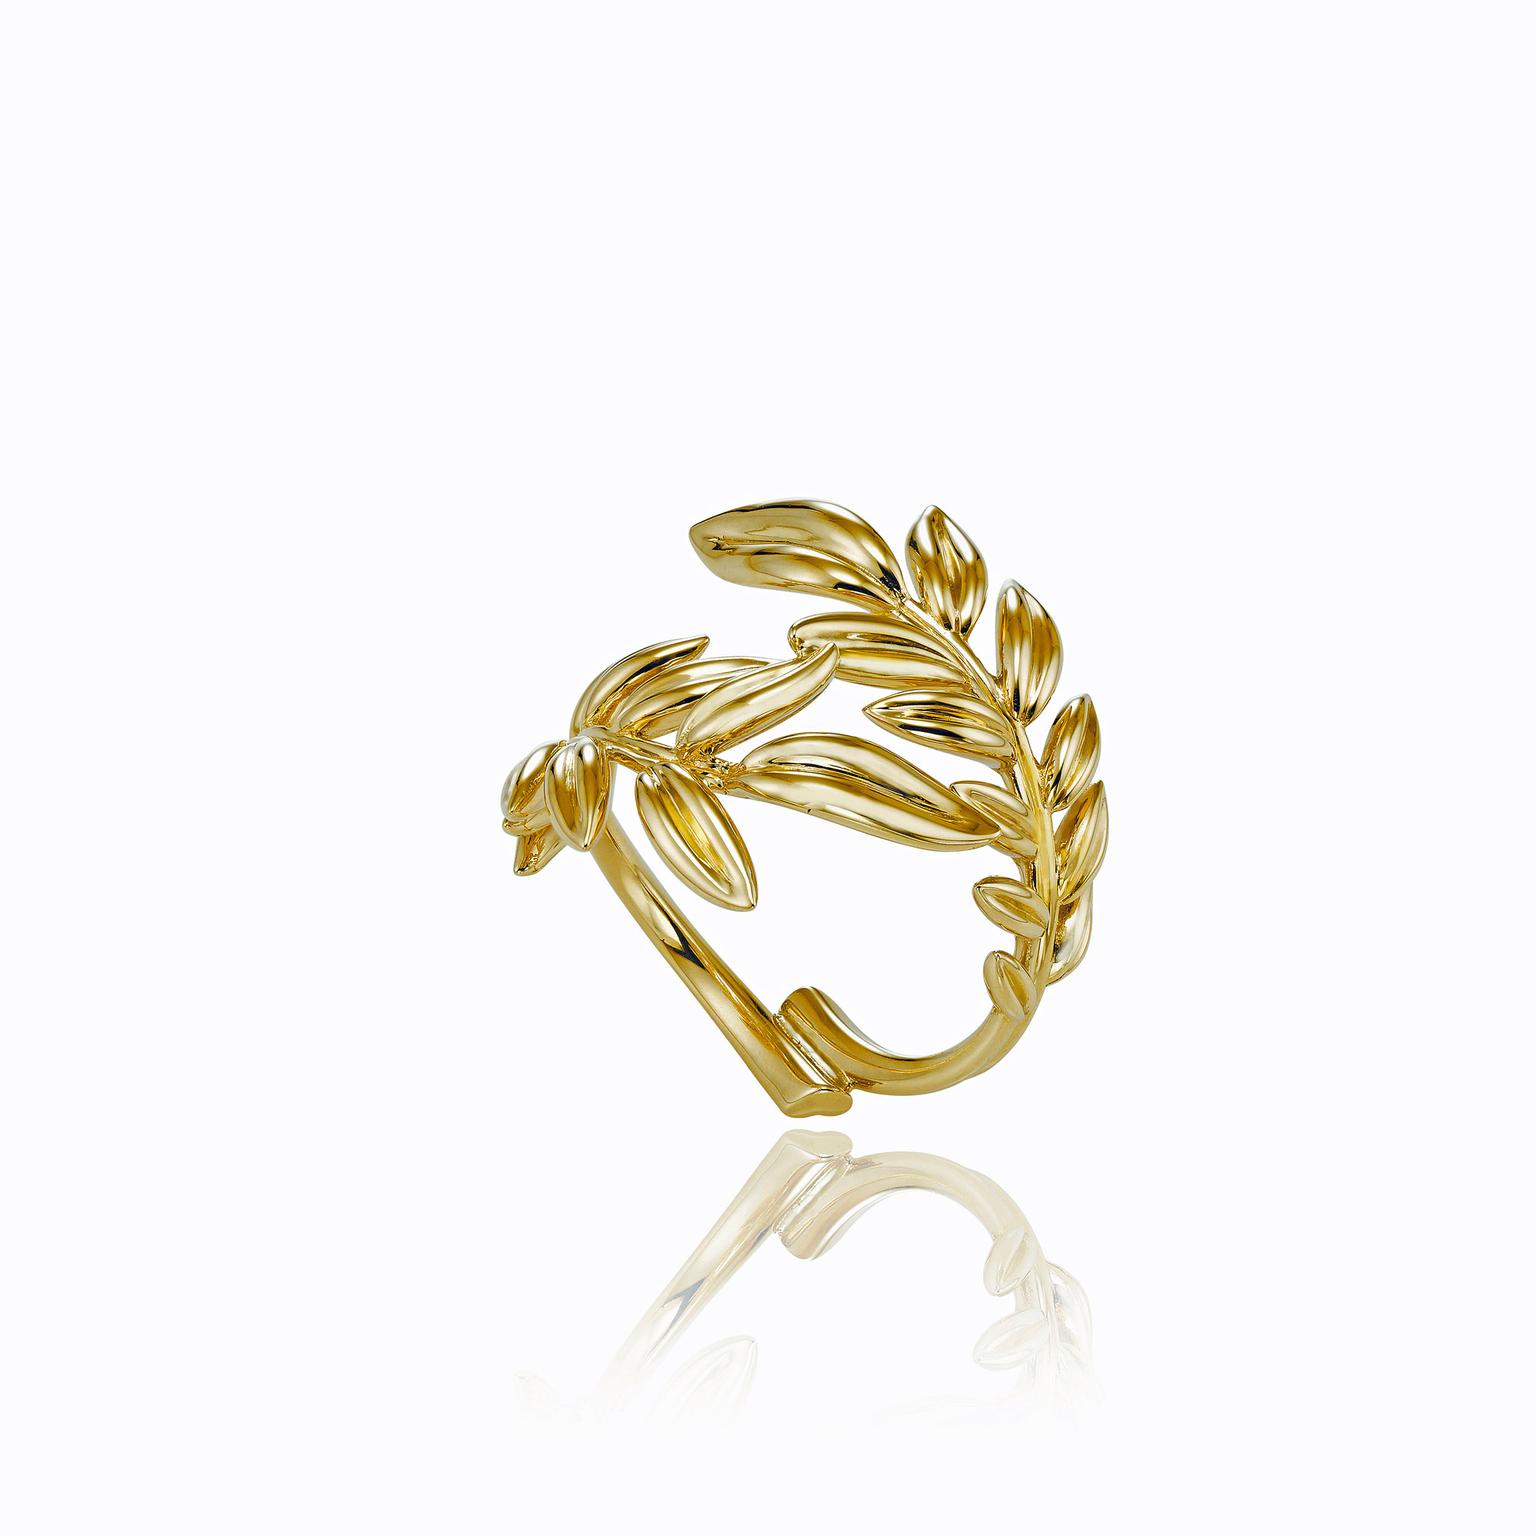 Chopard Palme Verte Fairmined yellow gold ring